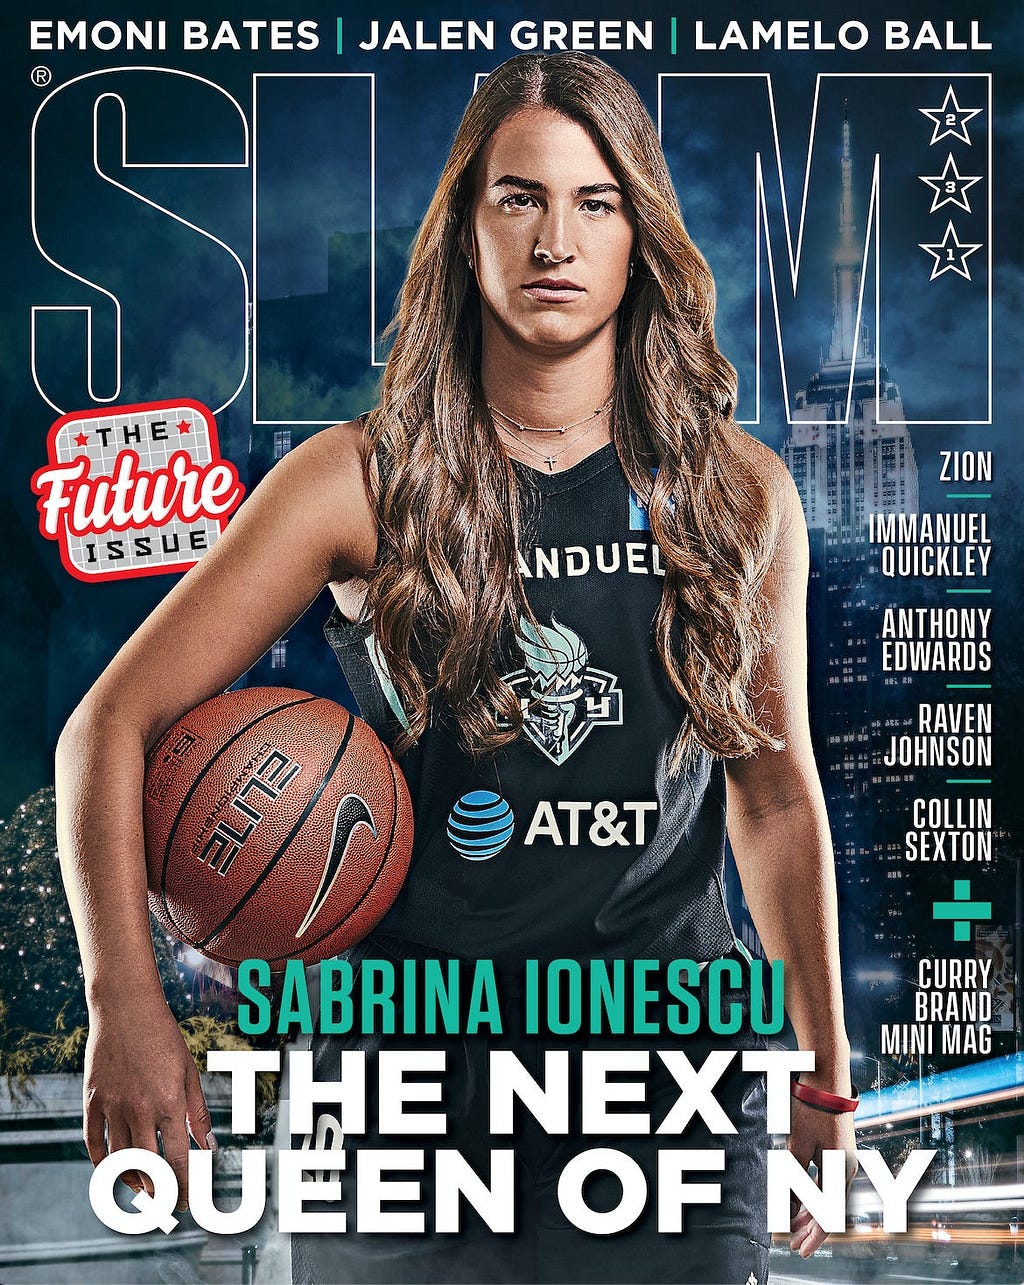 Sabrina Ionescu holding a basketball on her hip on SLAM Magazine cover